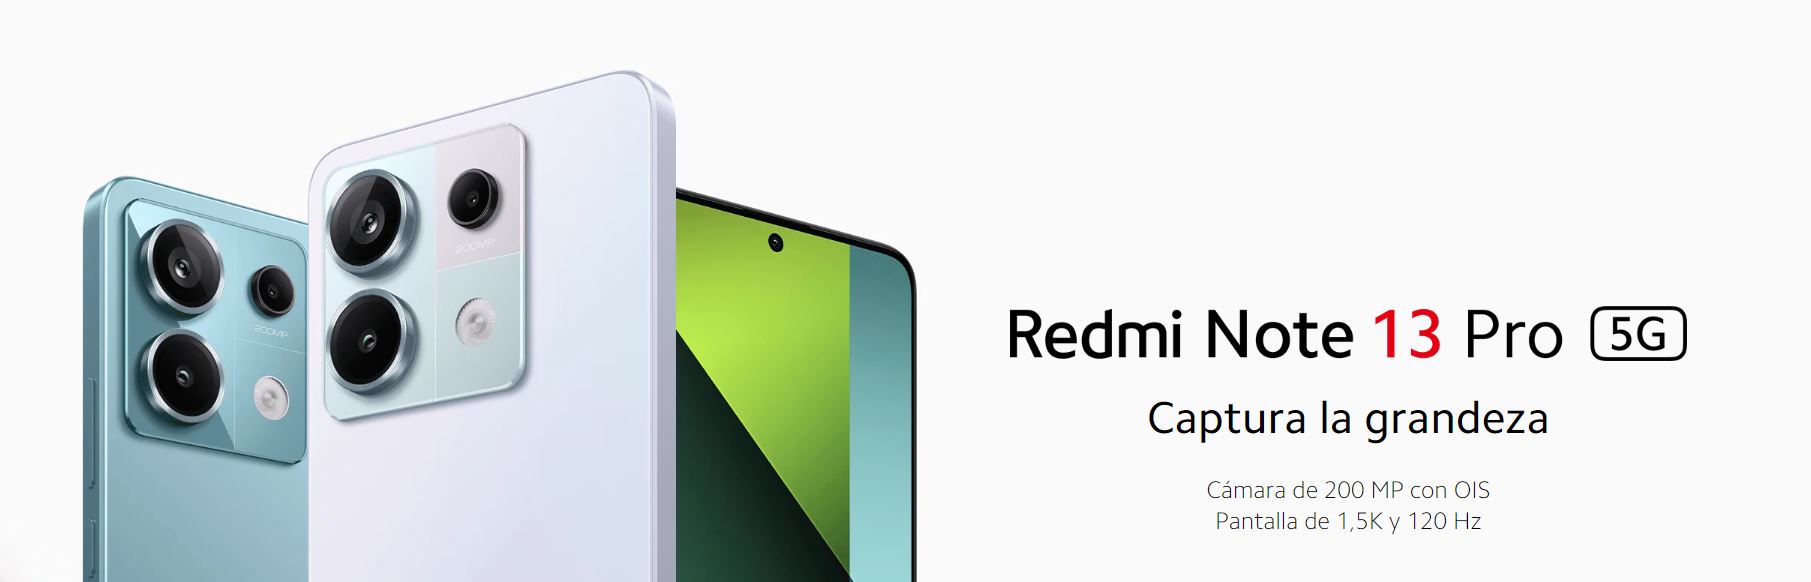 Buy Xiaomi Redmi Note 13 Pro Plus 5G 8GB/256GB ▷ Xiaomi Store in kiboTEK  Spain Europe®